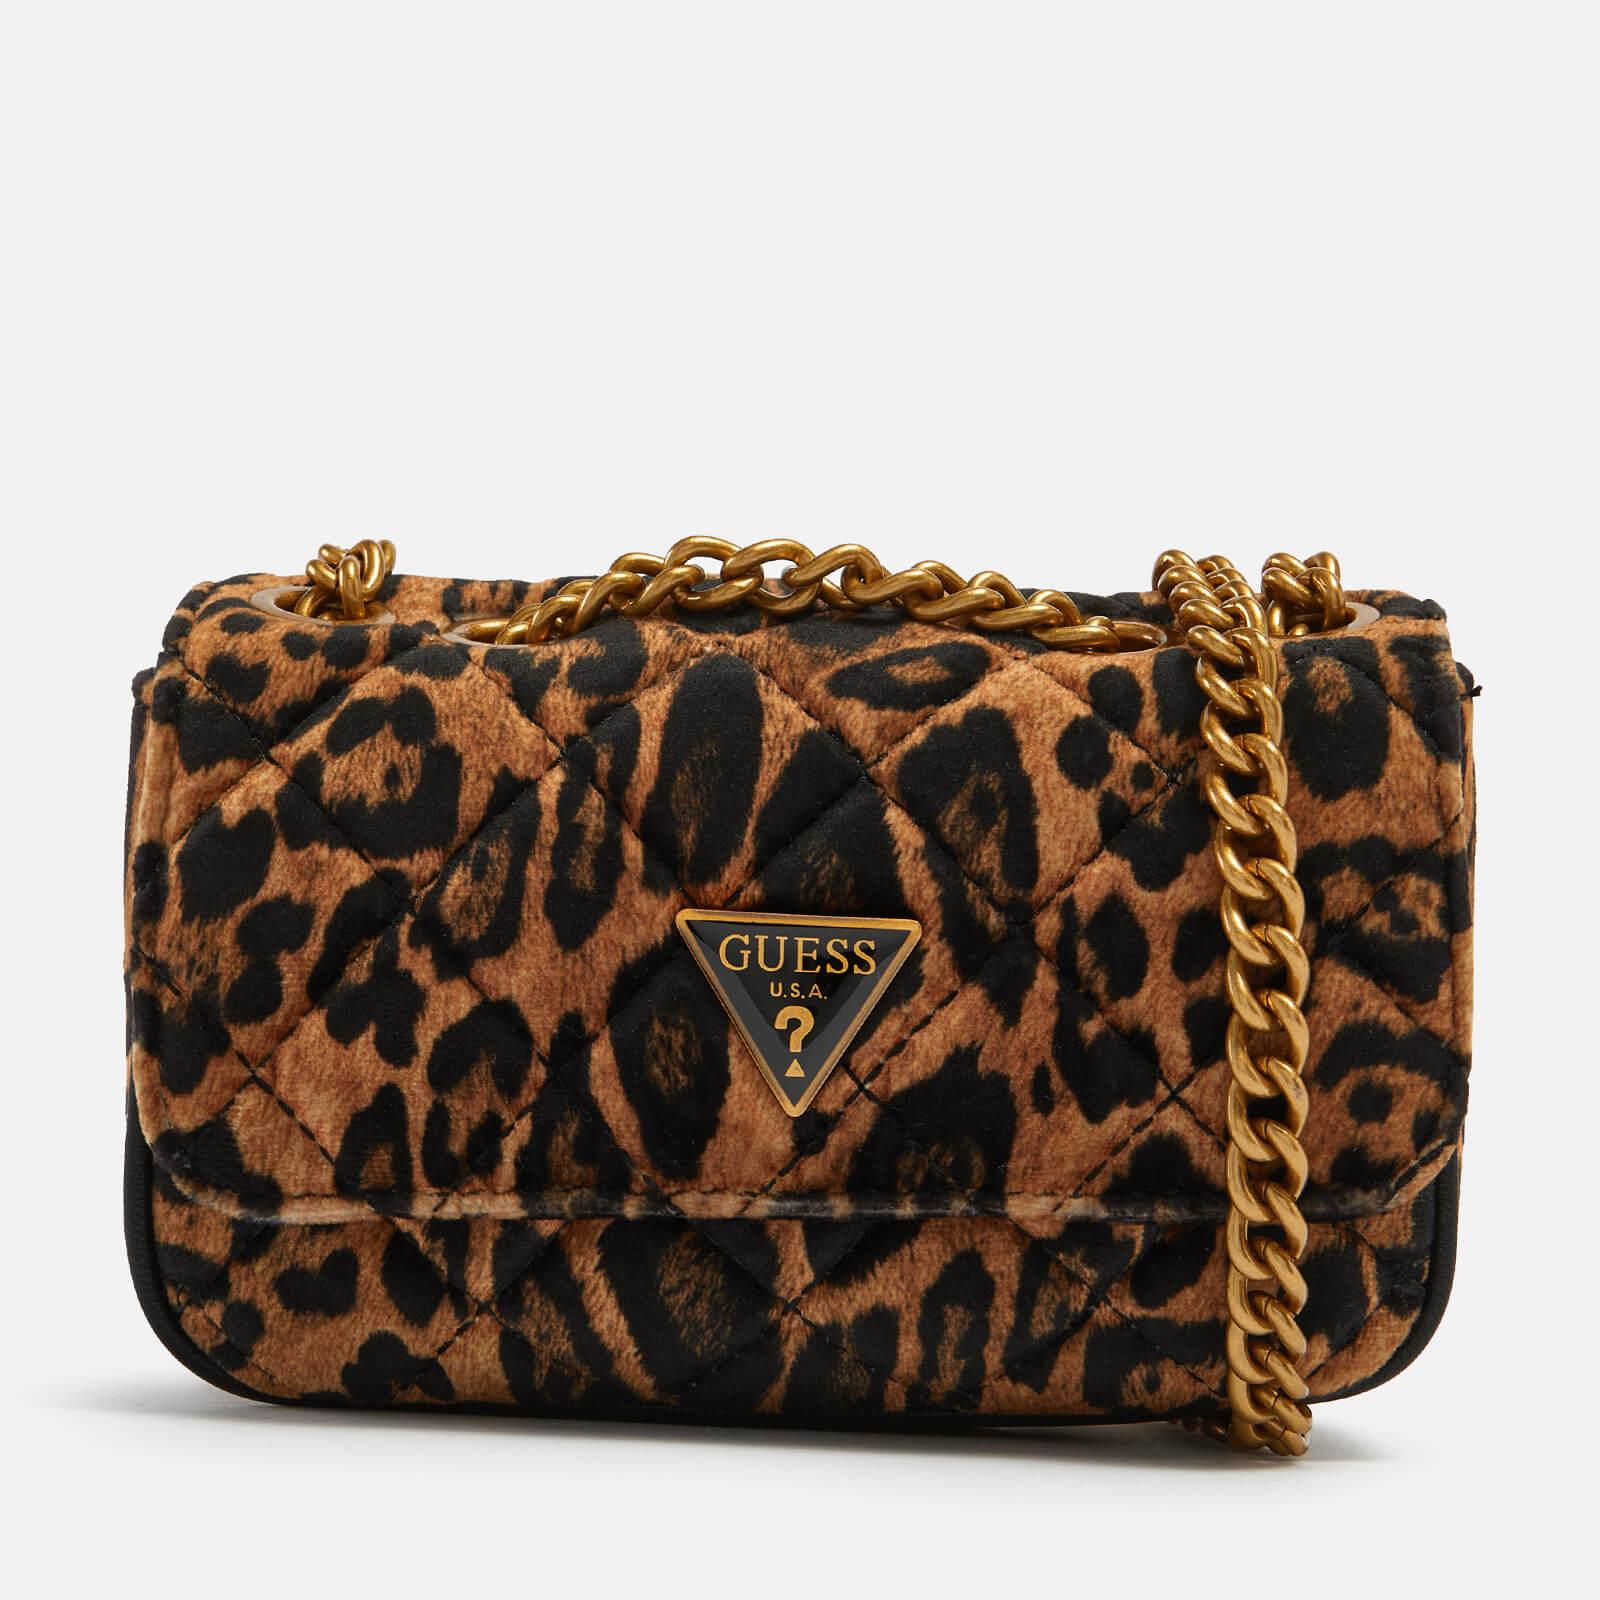 GUESS Leopard Bags & Handbags for Women for sale | eBay